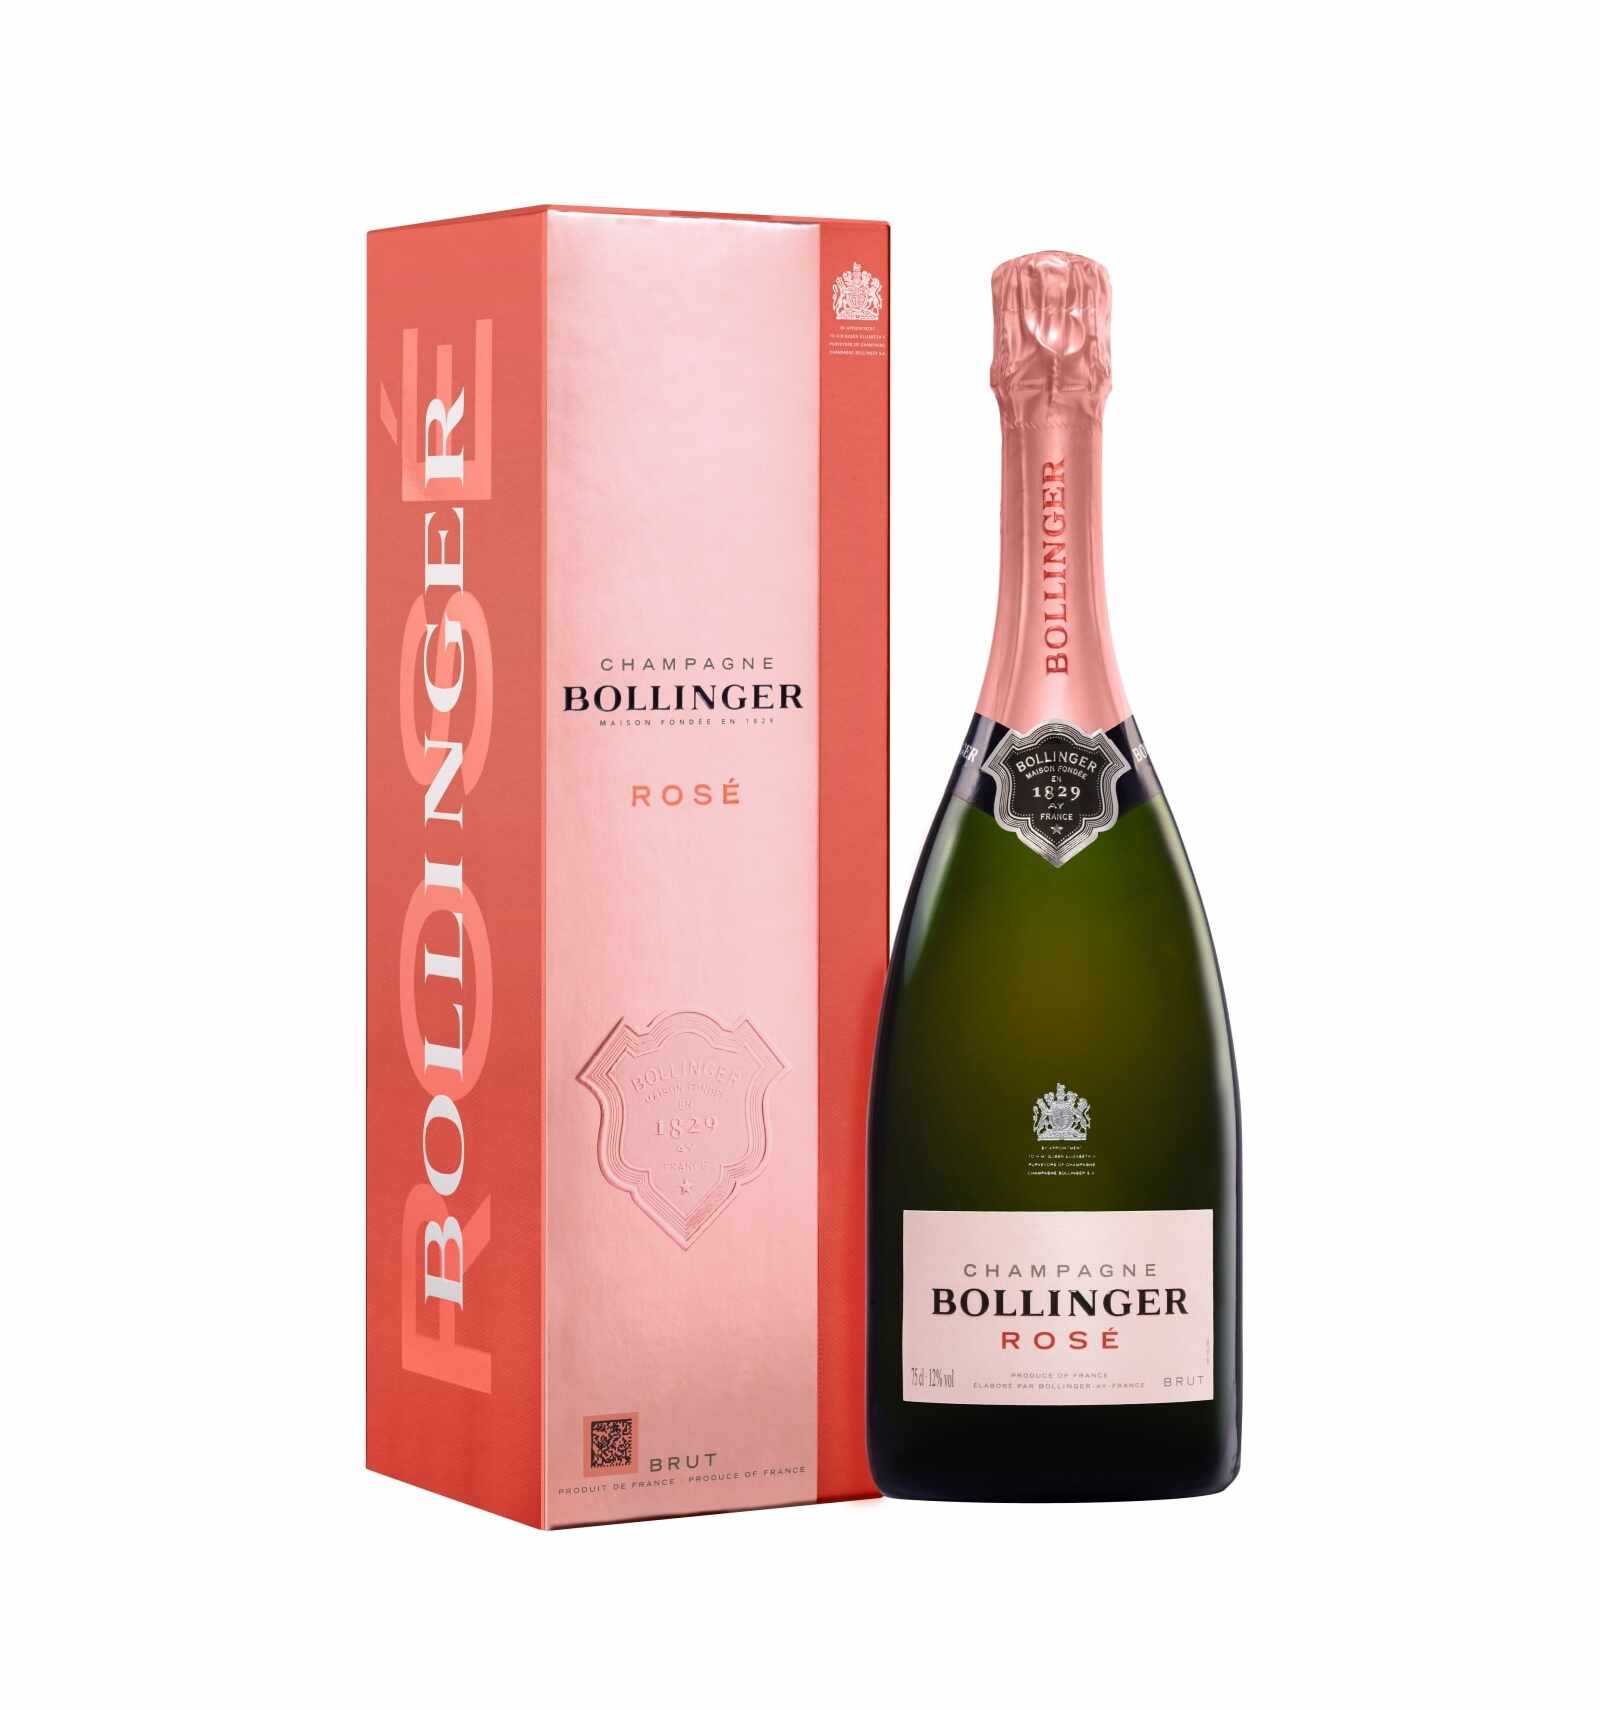 Sampanie Bollinger Rose Brut Champagne, 12% alc. 0.75L, Franta